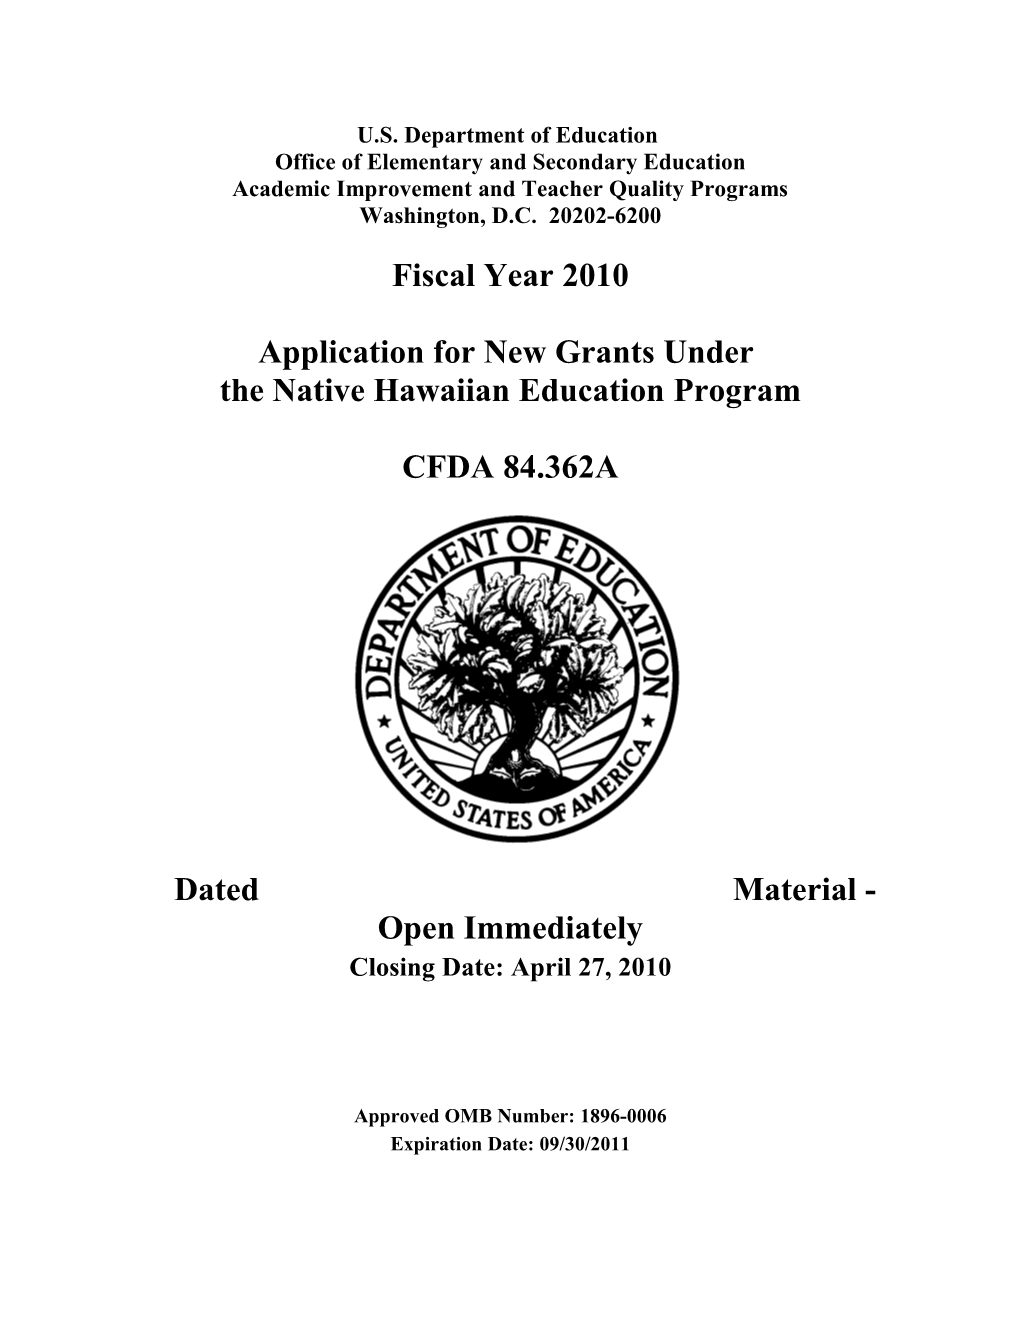 FY 2010 Application for New Grants Under the Native Hawaiian Education Program CFDA 84.362A